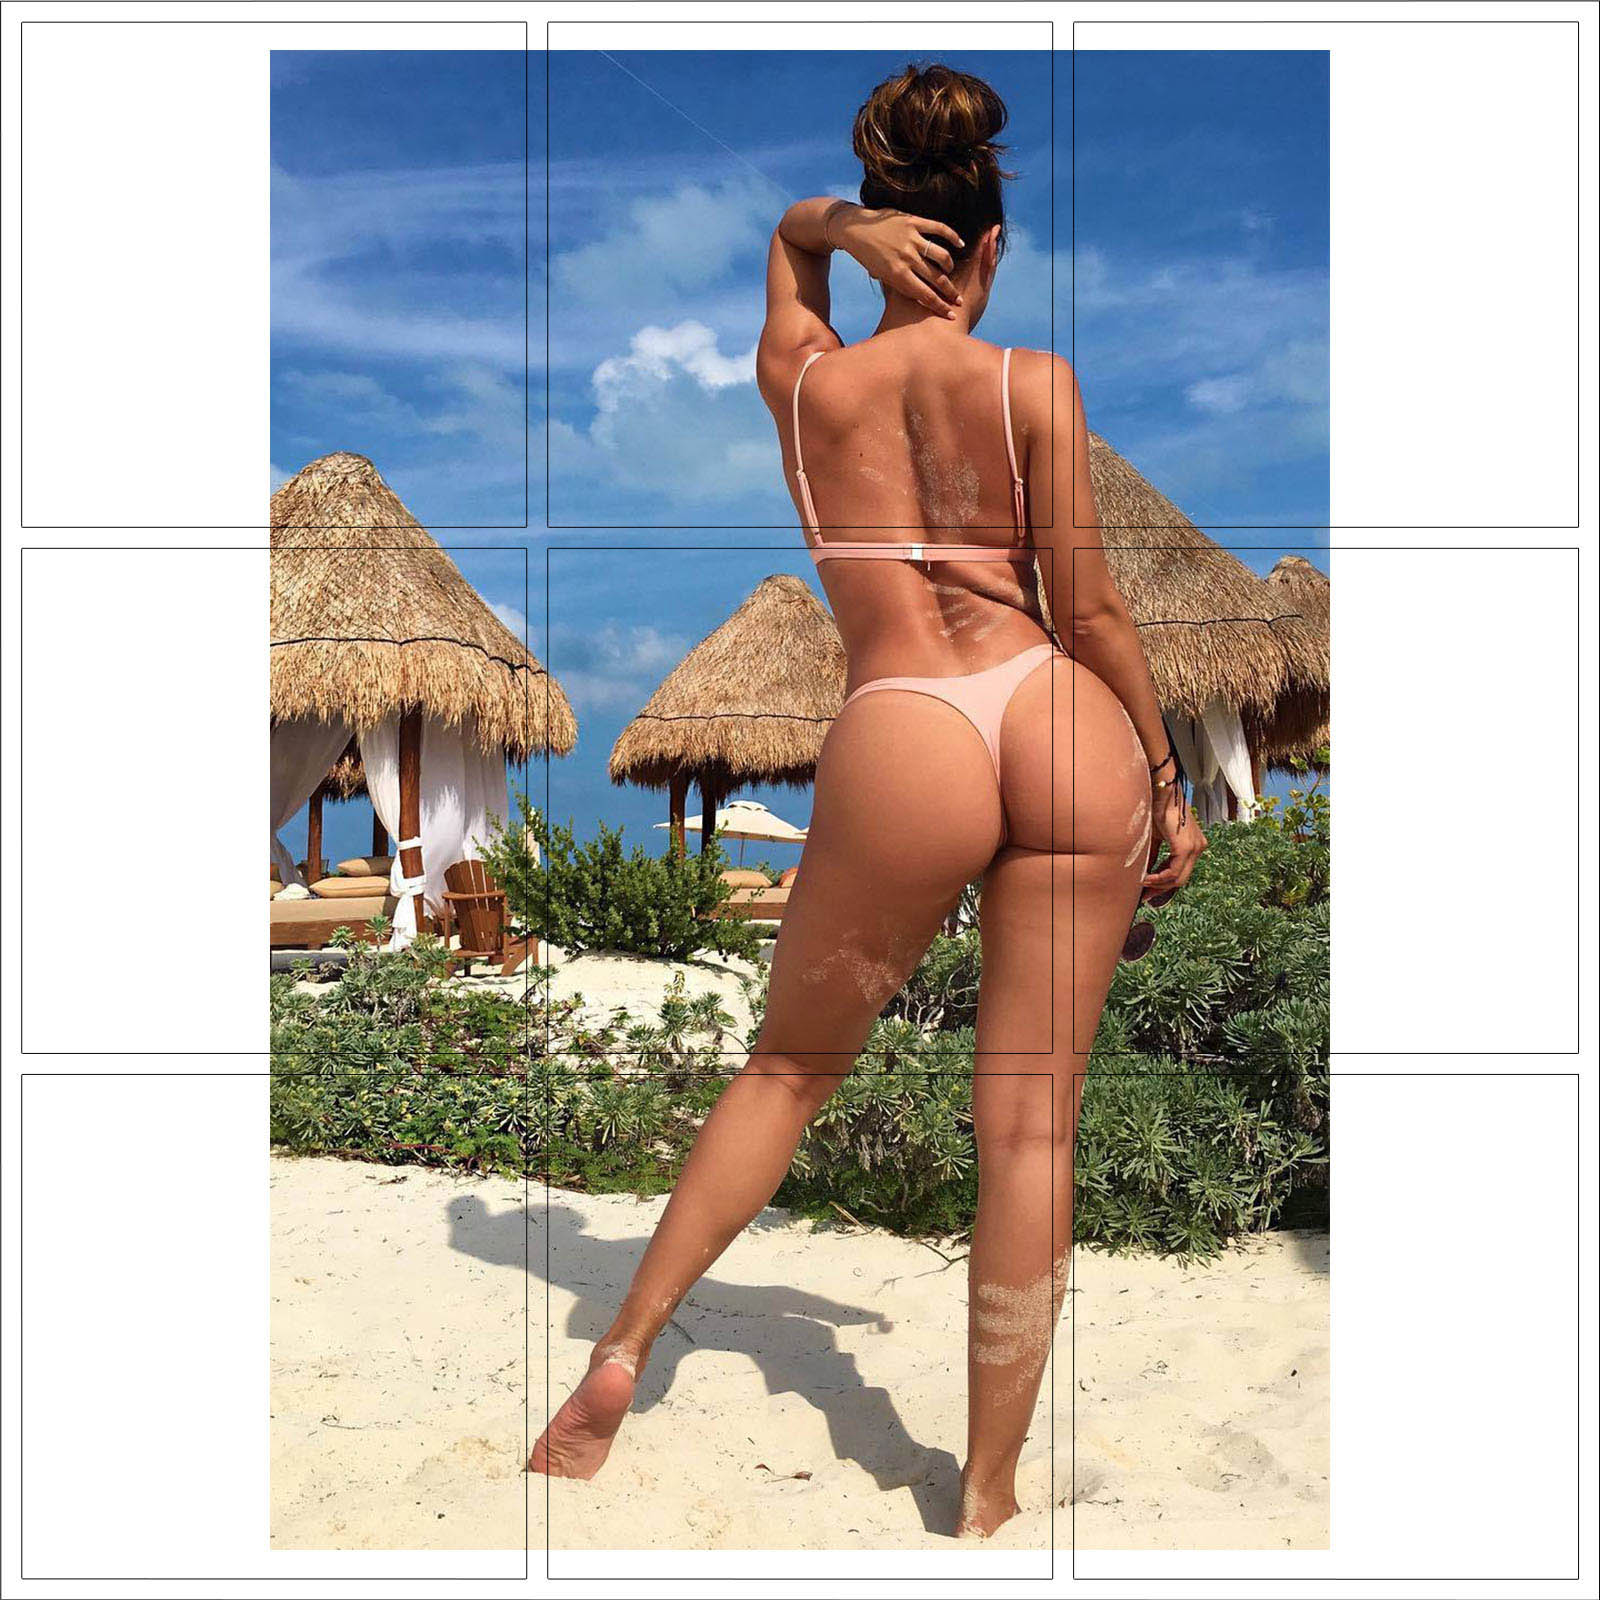 Ana Cheri - Hot Sexy Photo Print - Buy 1, Get 2 FREE - Choice Of 75 | eBay